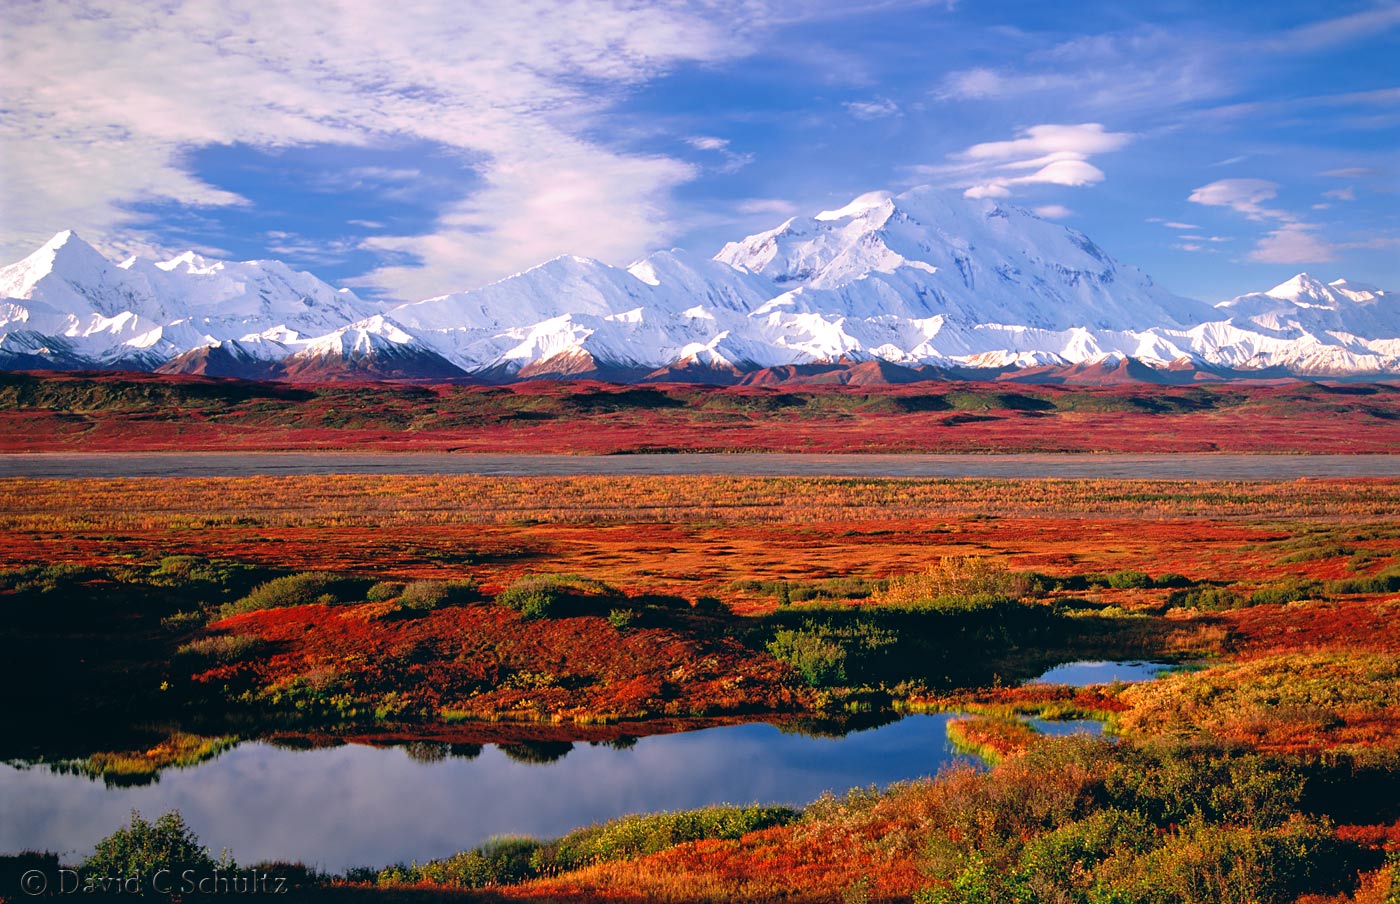 Mount McKinley in Denali National Park, Alaska - Image #153-303